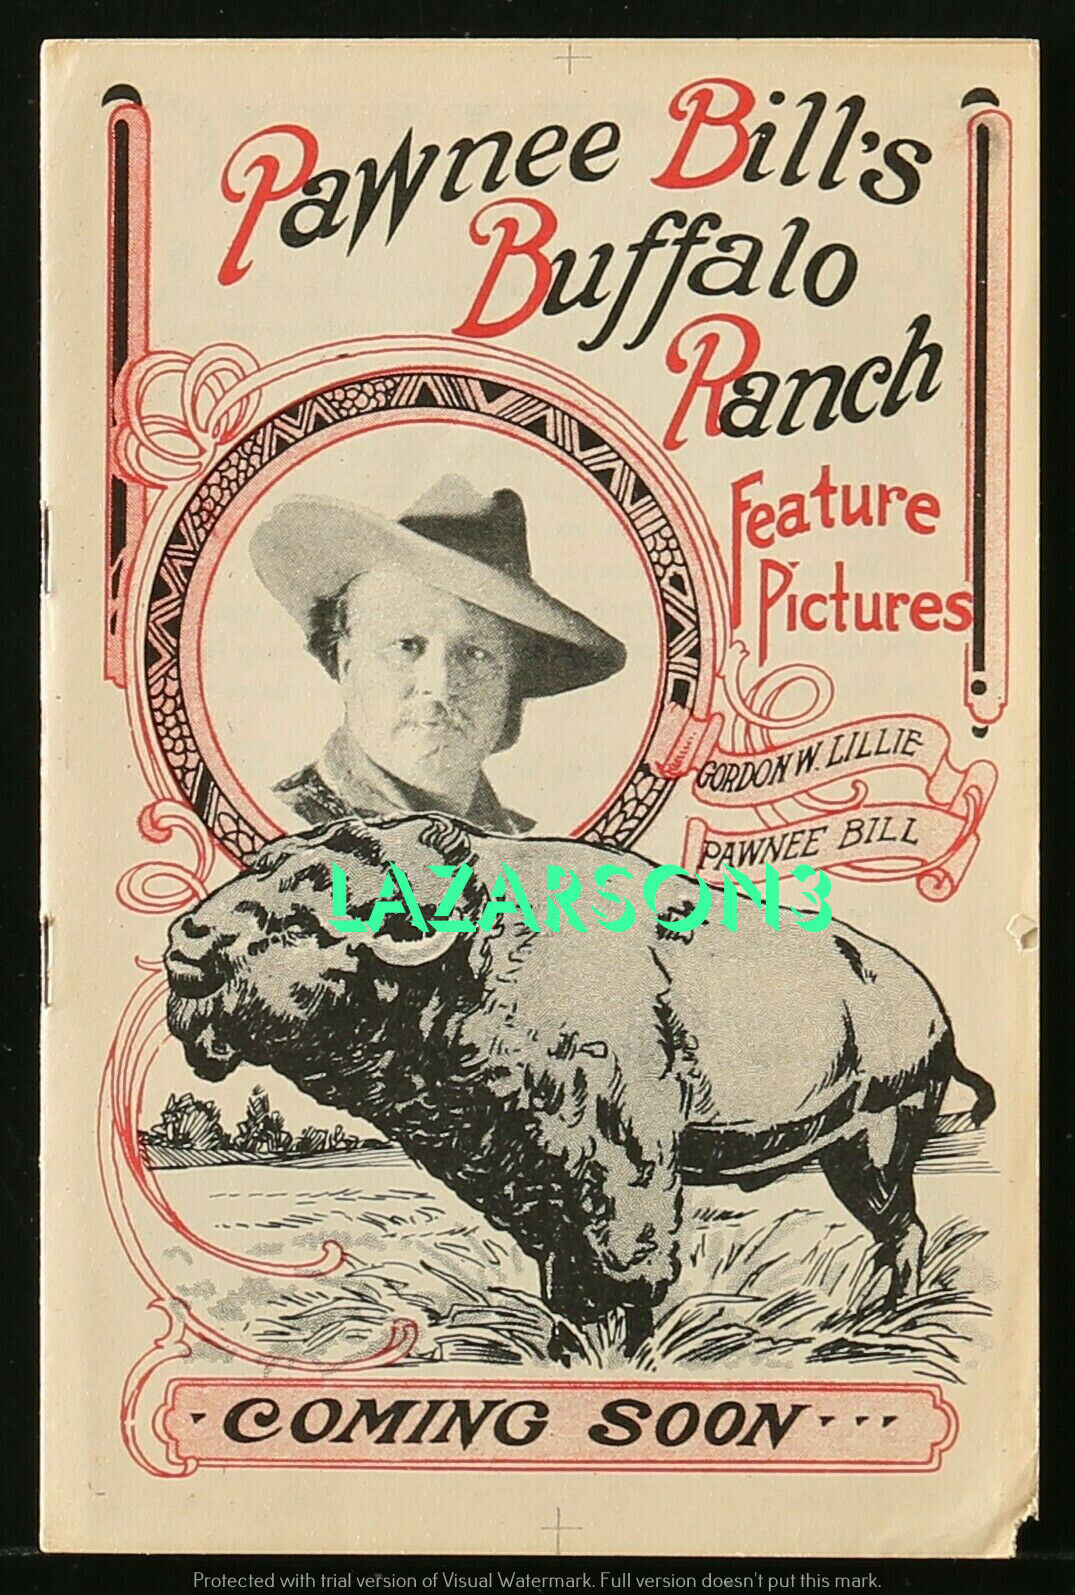 Pawnee Bill Buffalo Ranch 6 Pg Rare Serial Film Herald 1910s American Indians